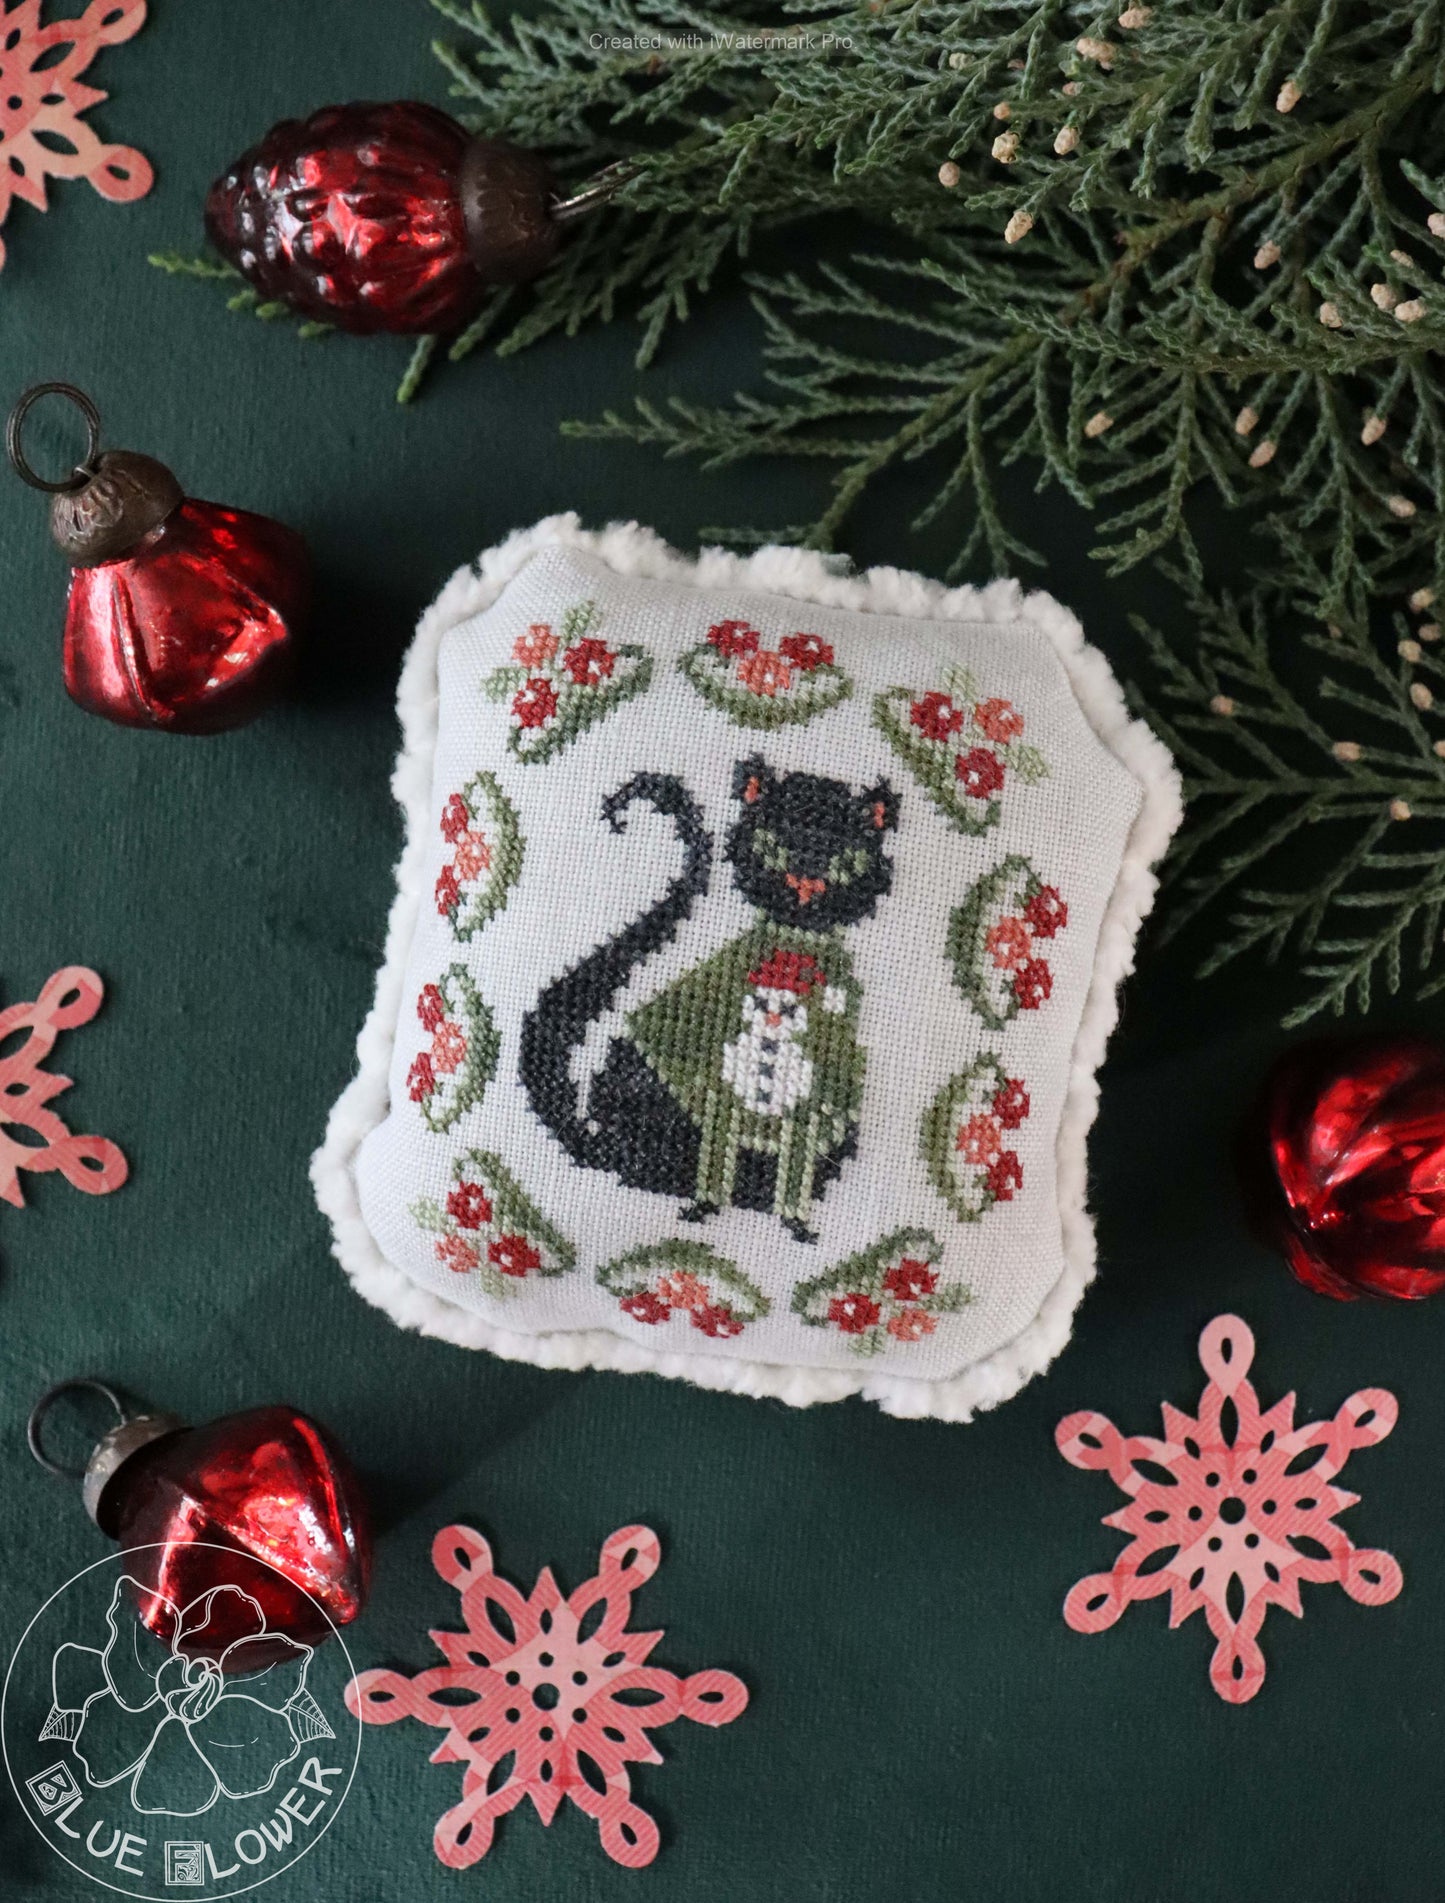 Blue Flower Cozy Christmas Cat cross stitch christmas ornament pattern